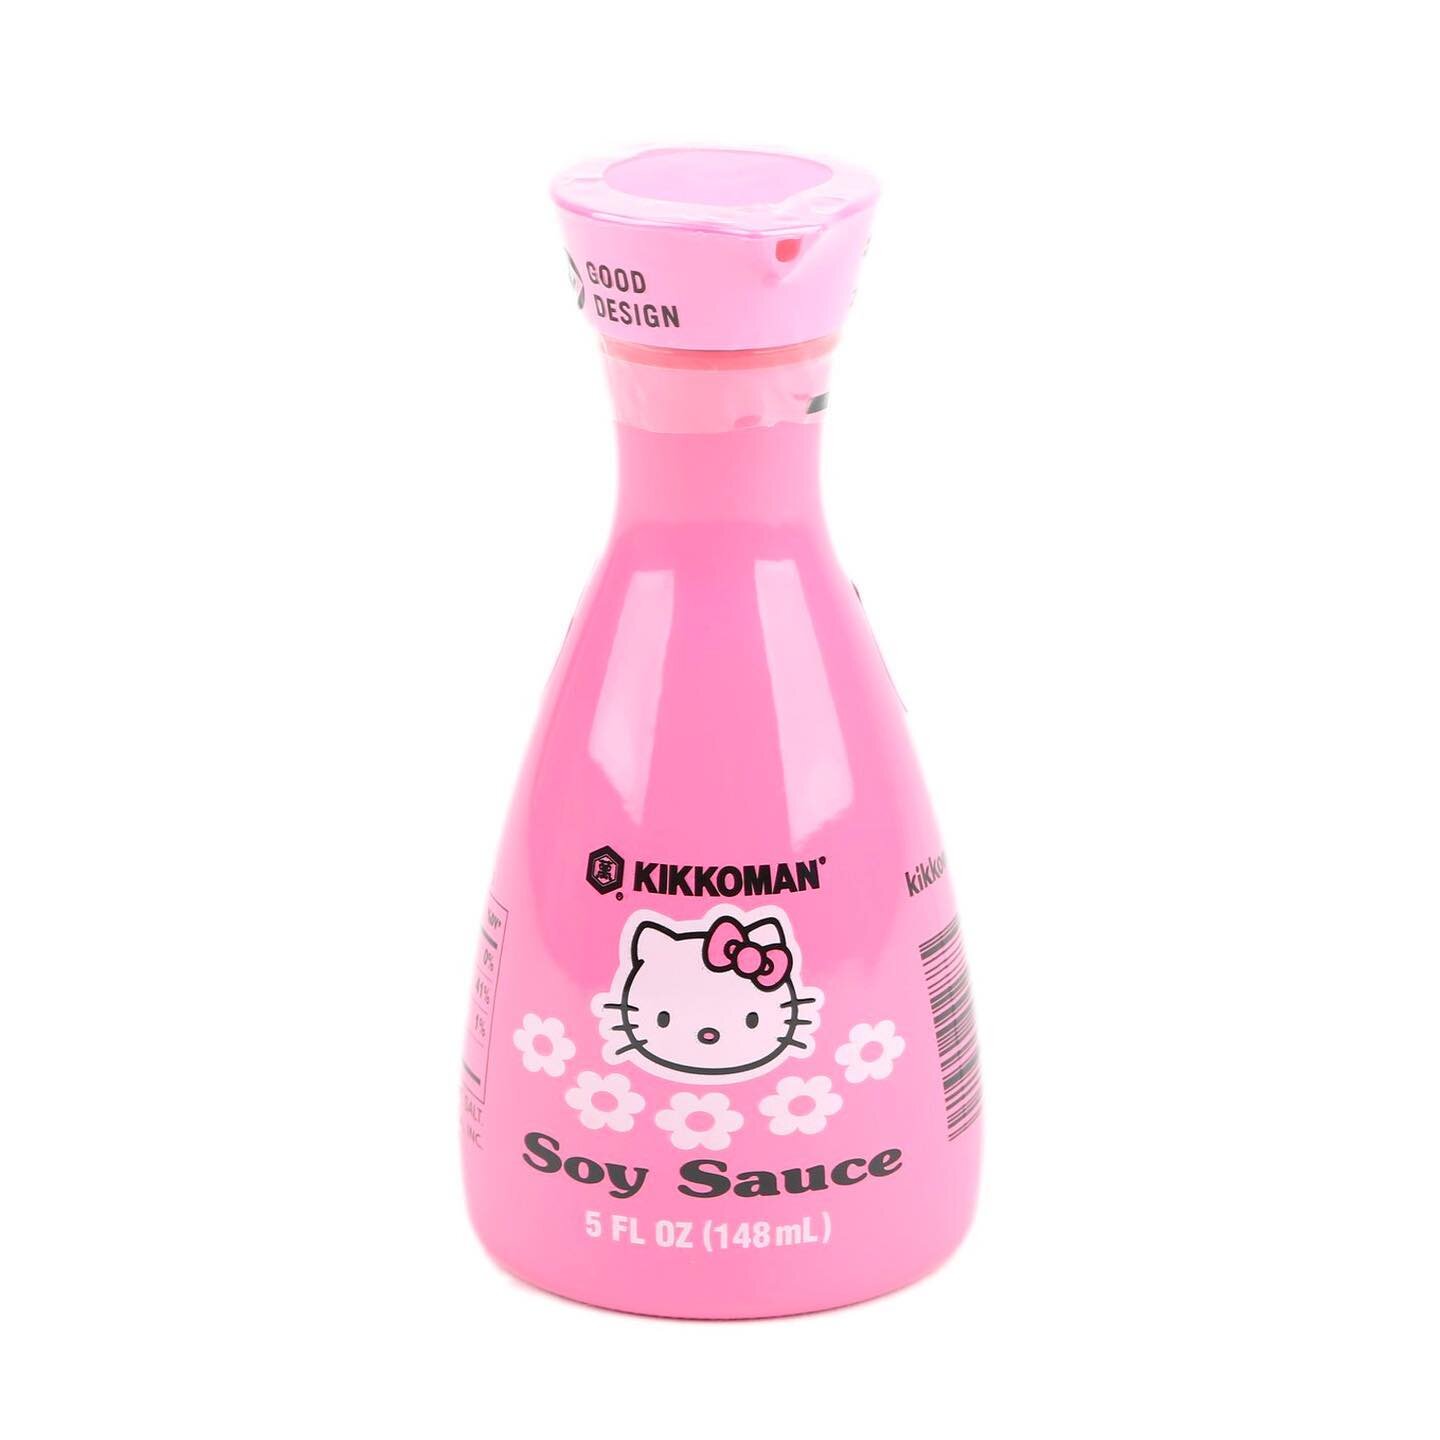 Limited edition Hello Kitty Kikkoman soy sauce, released in 2018